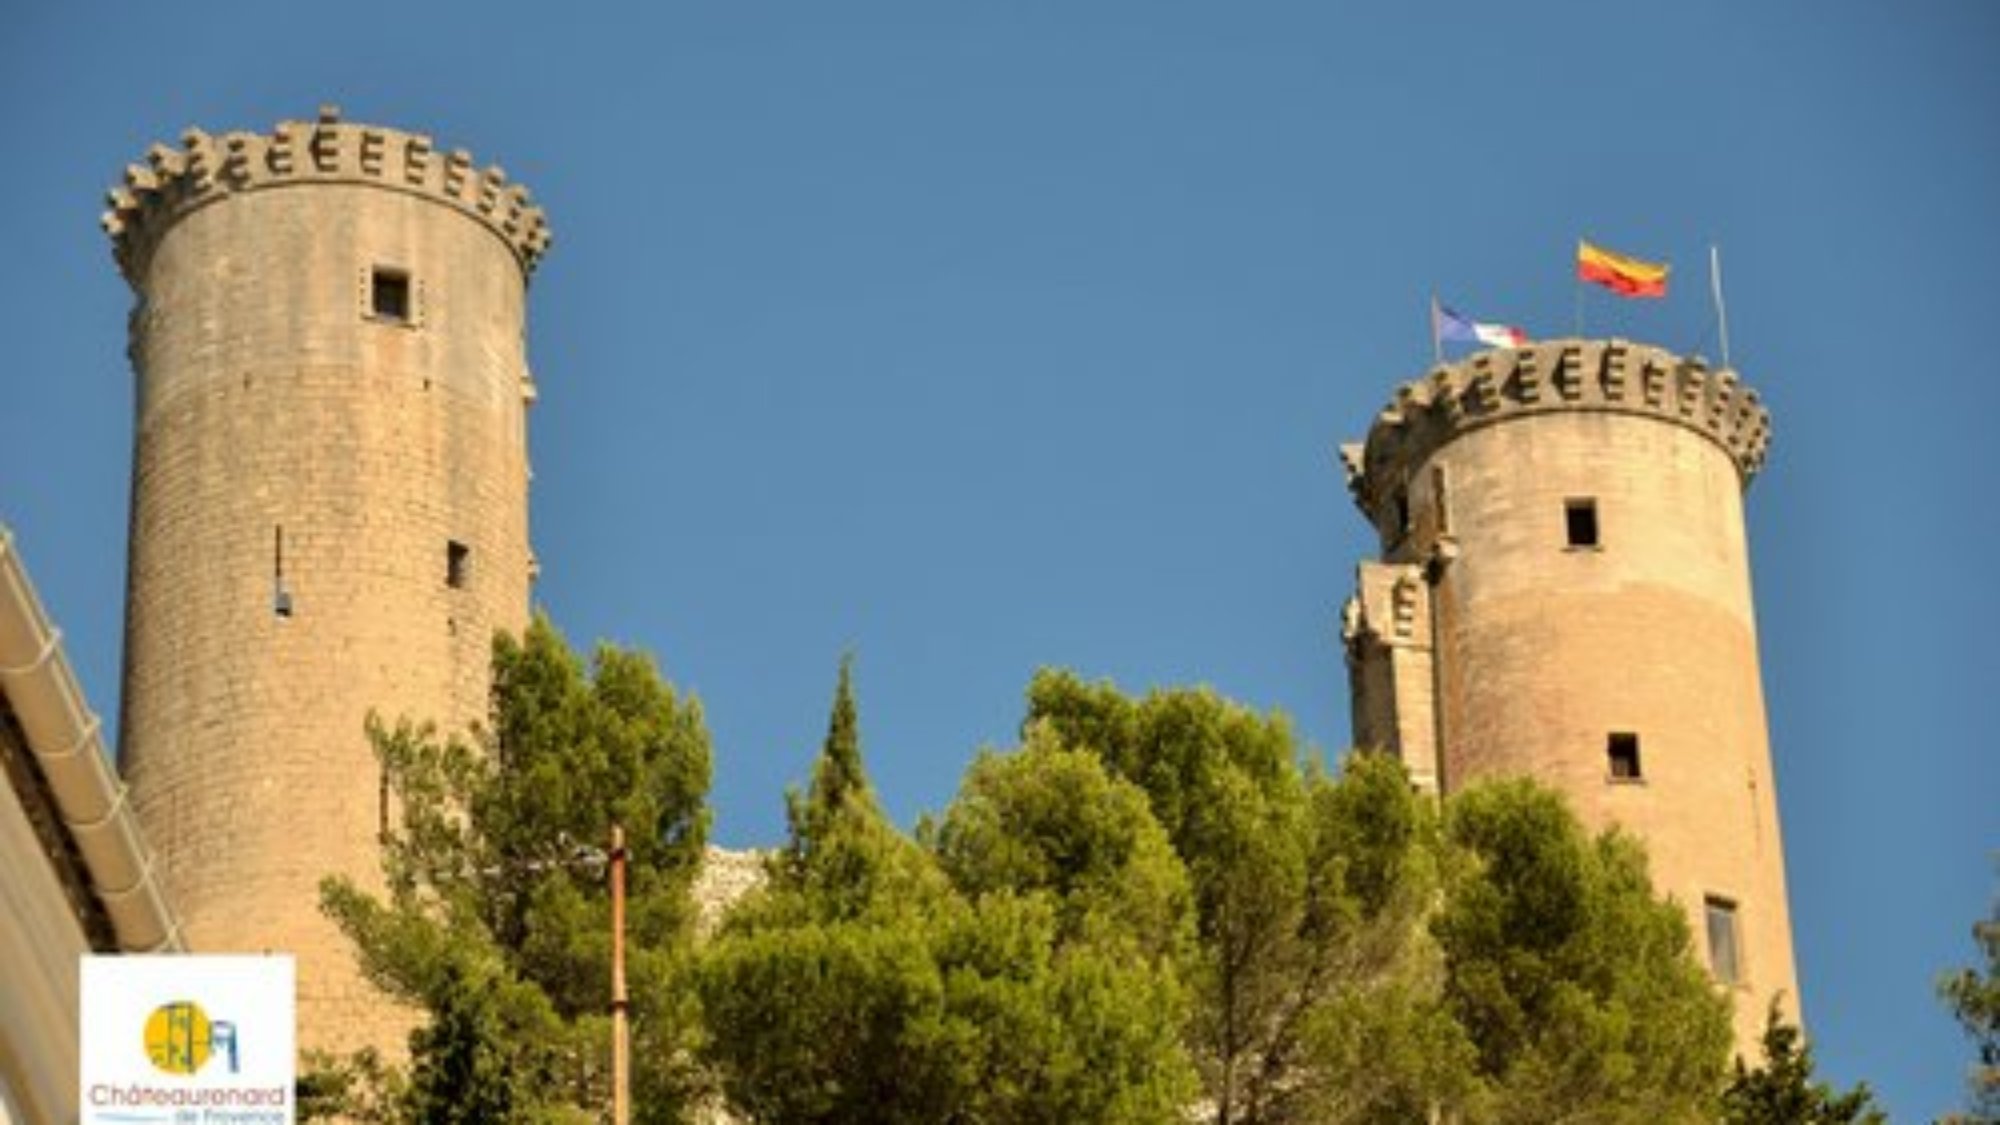 châteaurenard de provence